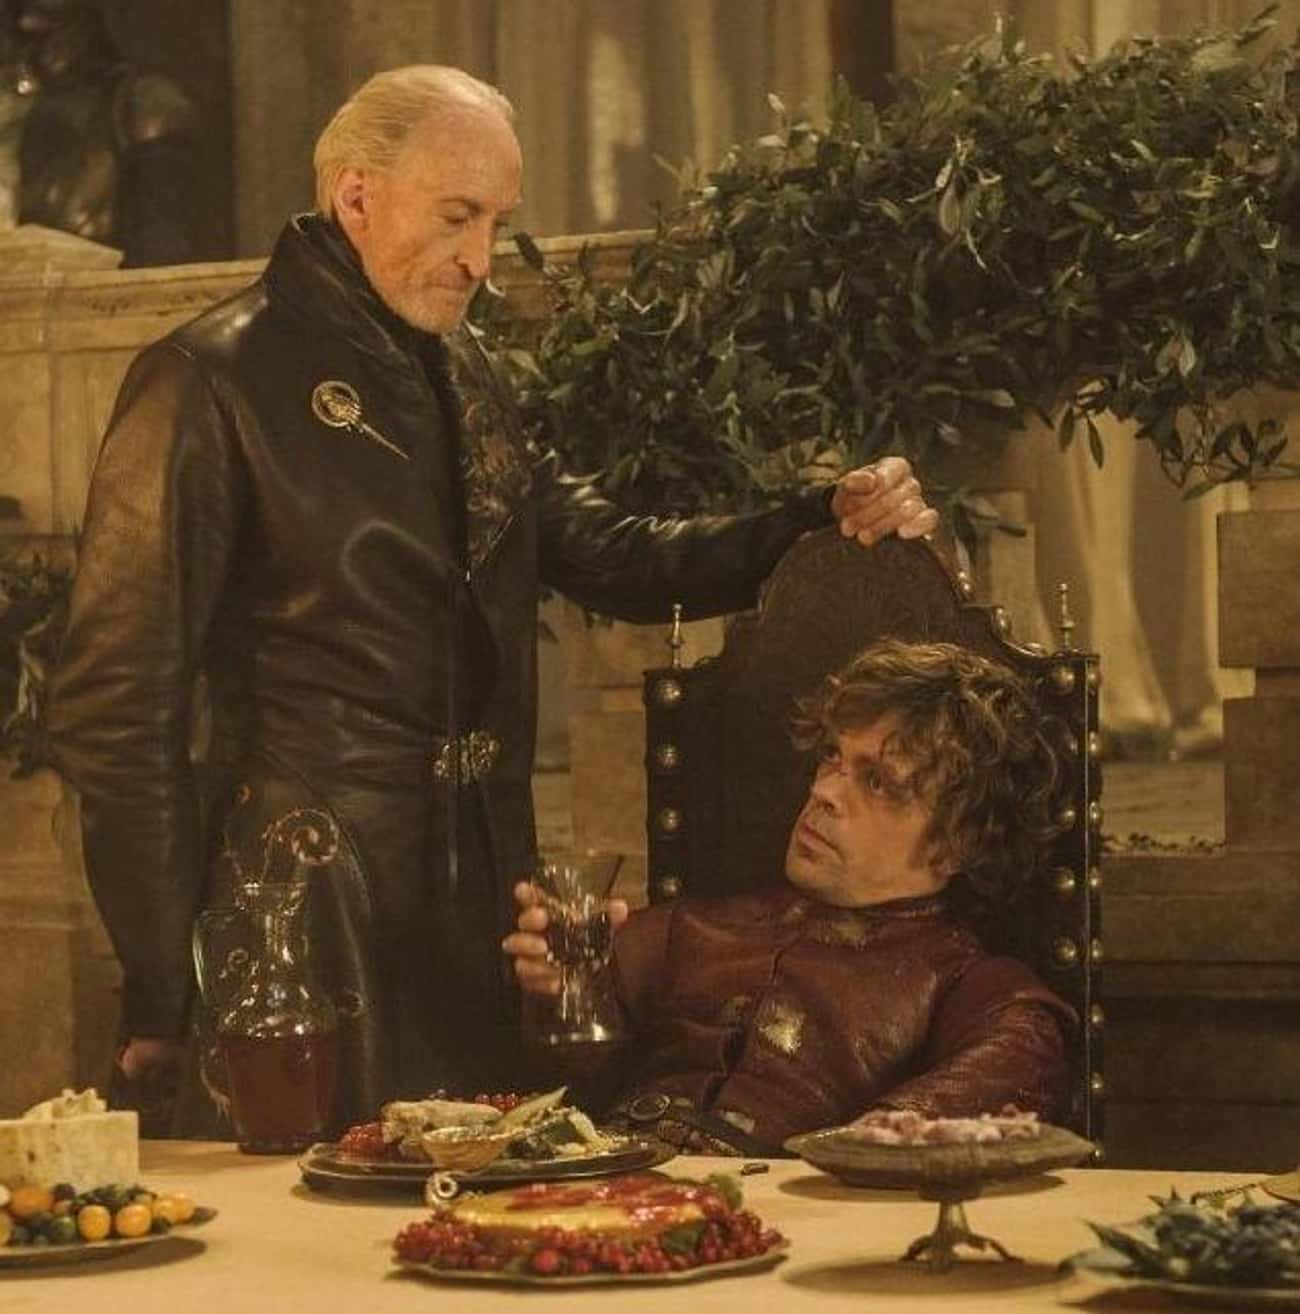 Tyrion’s Father Was Aerys Targaryen